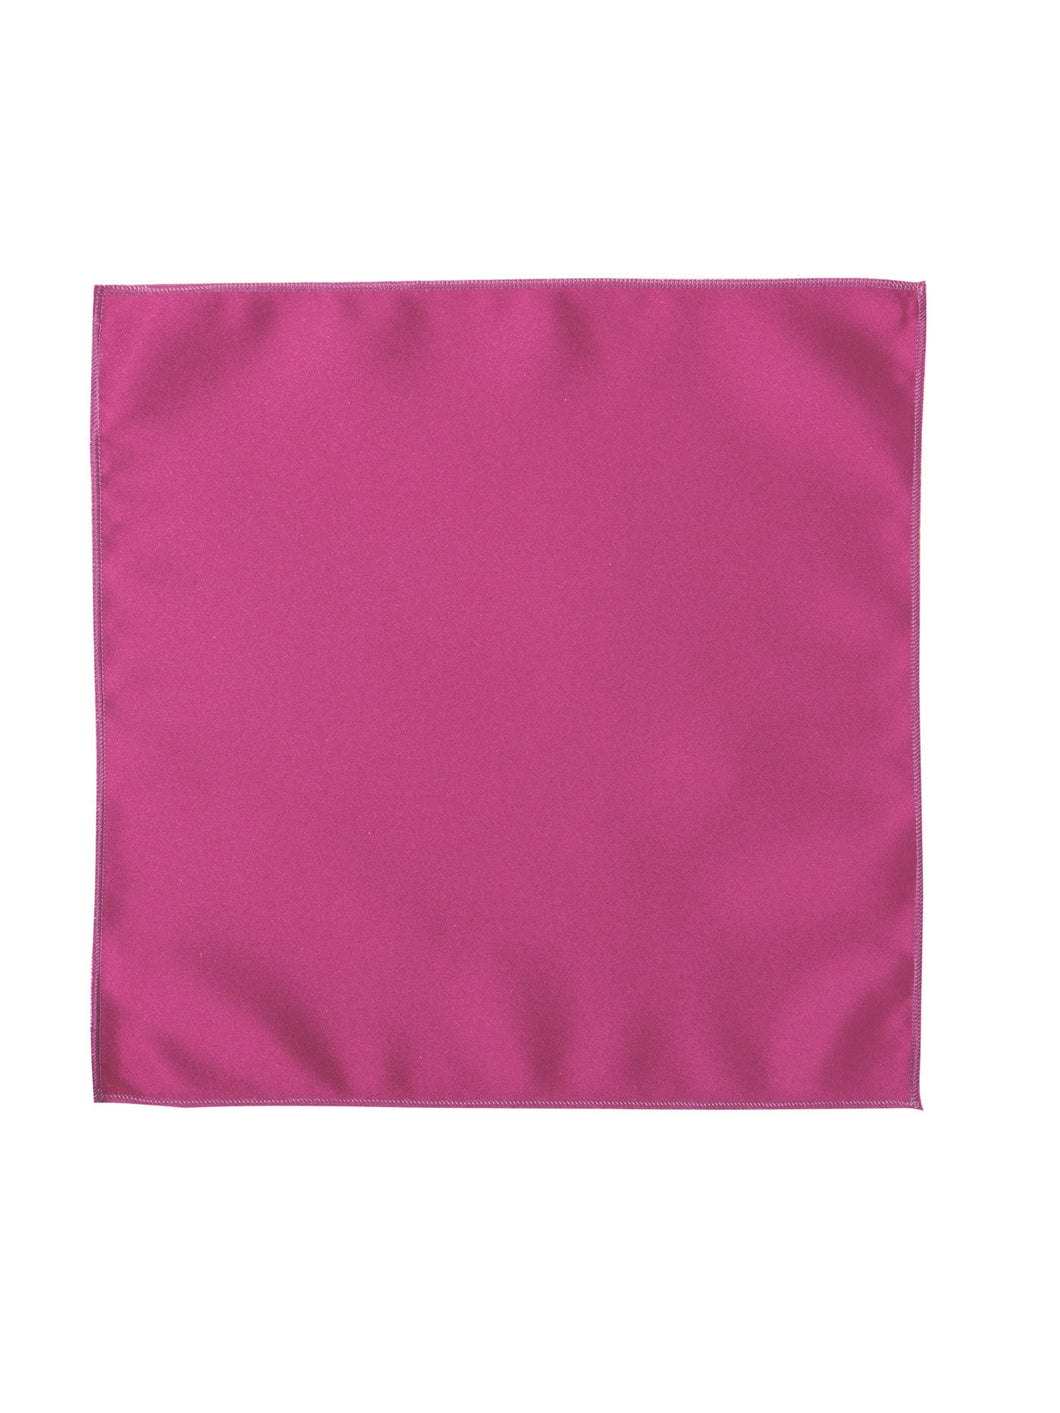 Deluxe Satin Formal Pocket Square (Hot Pink)